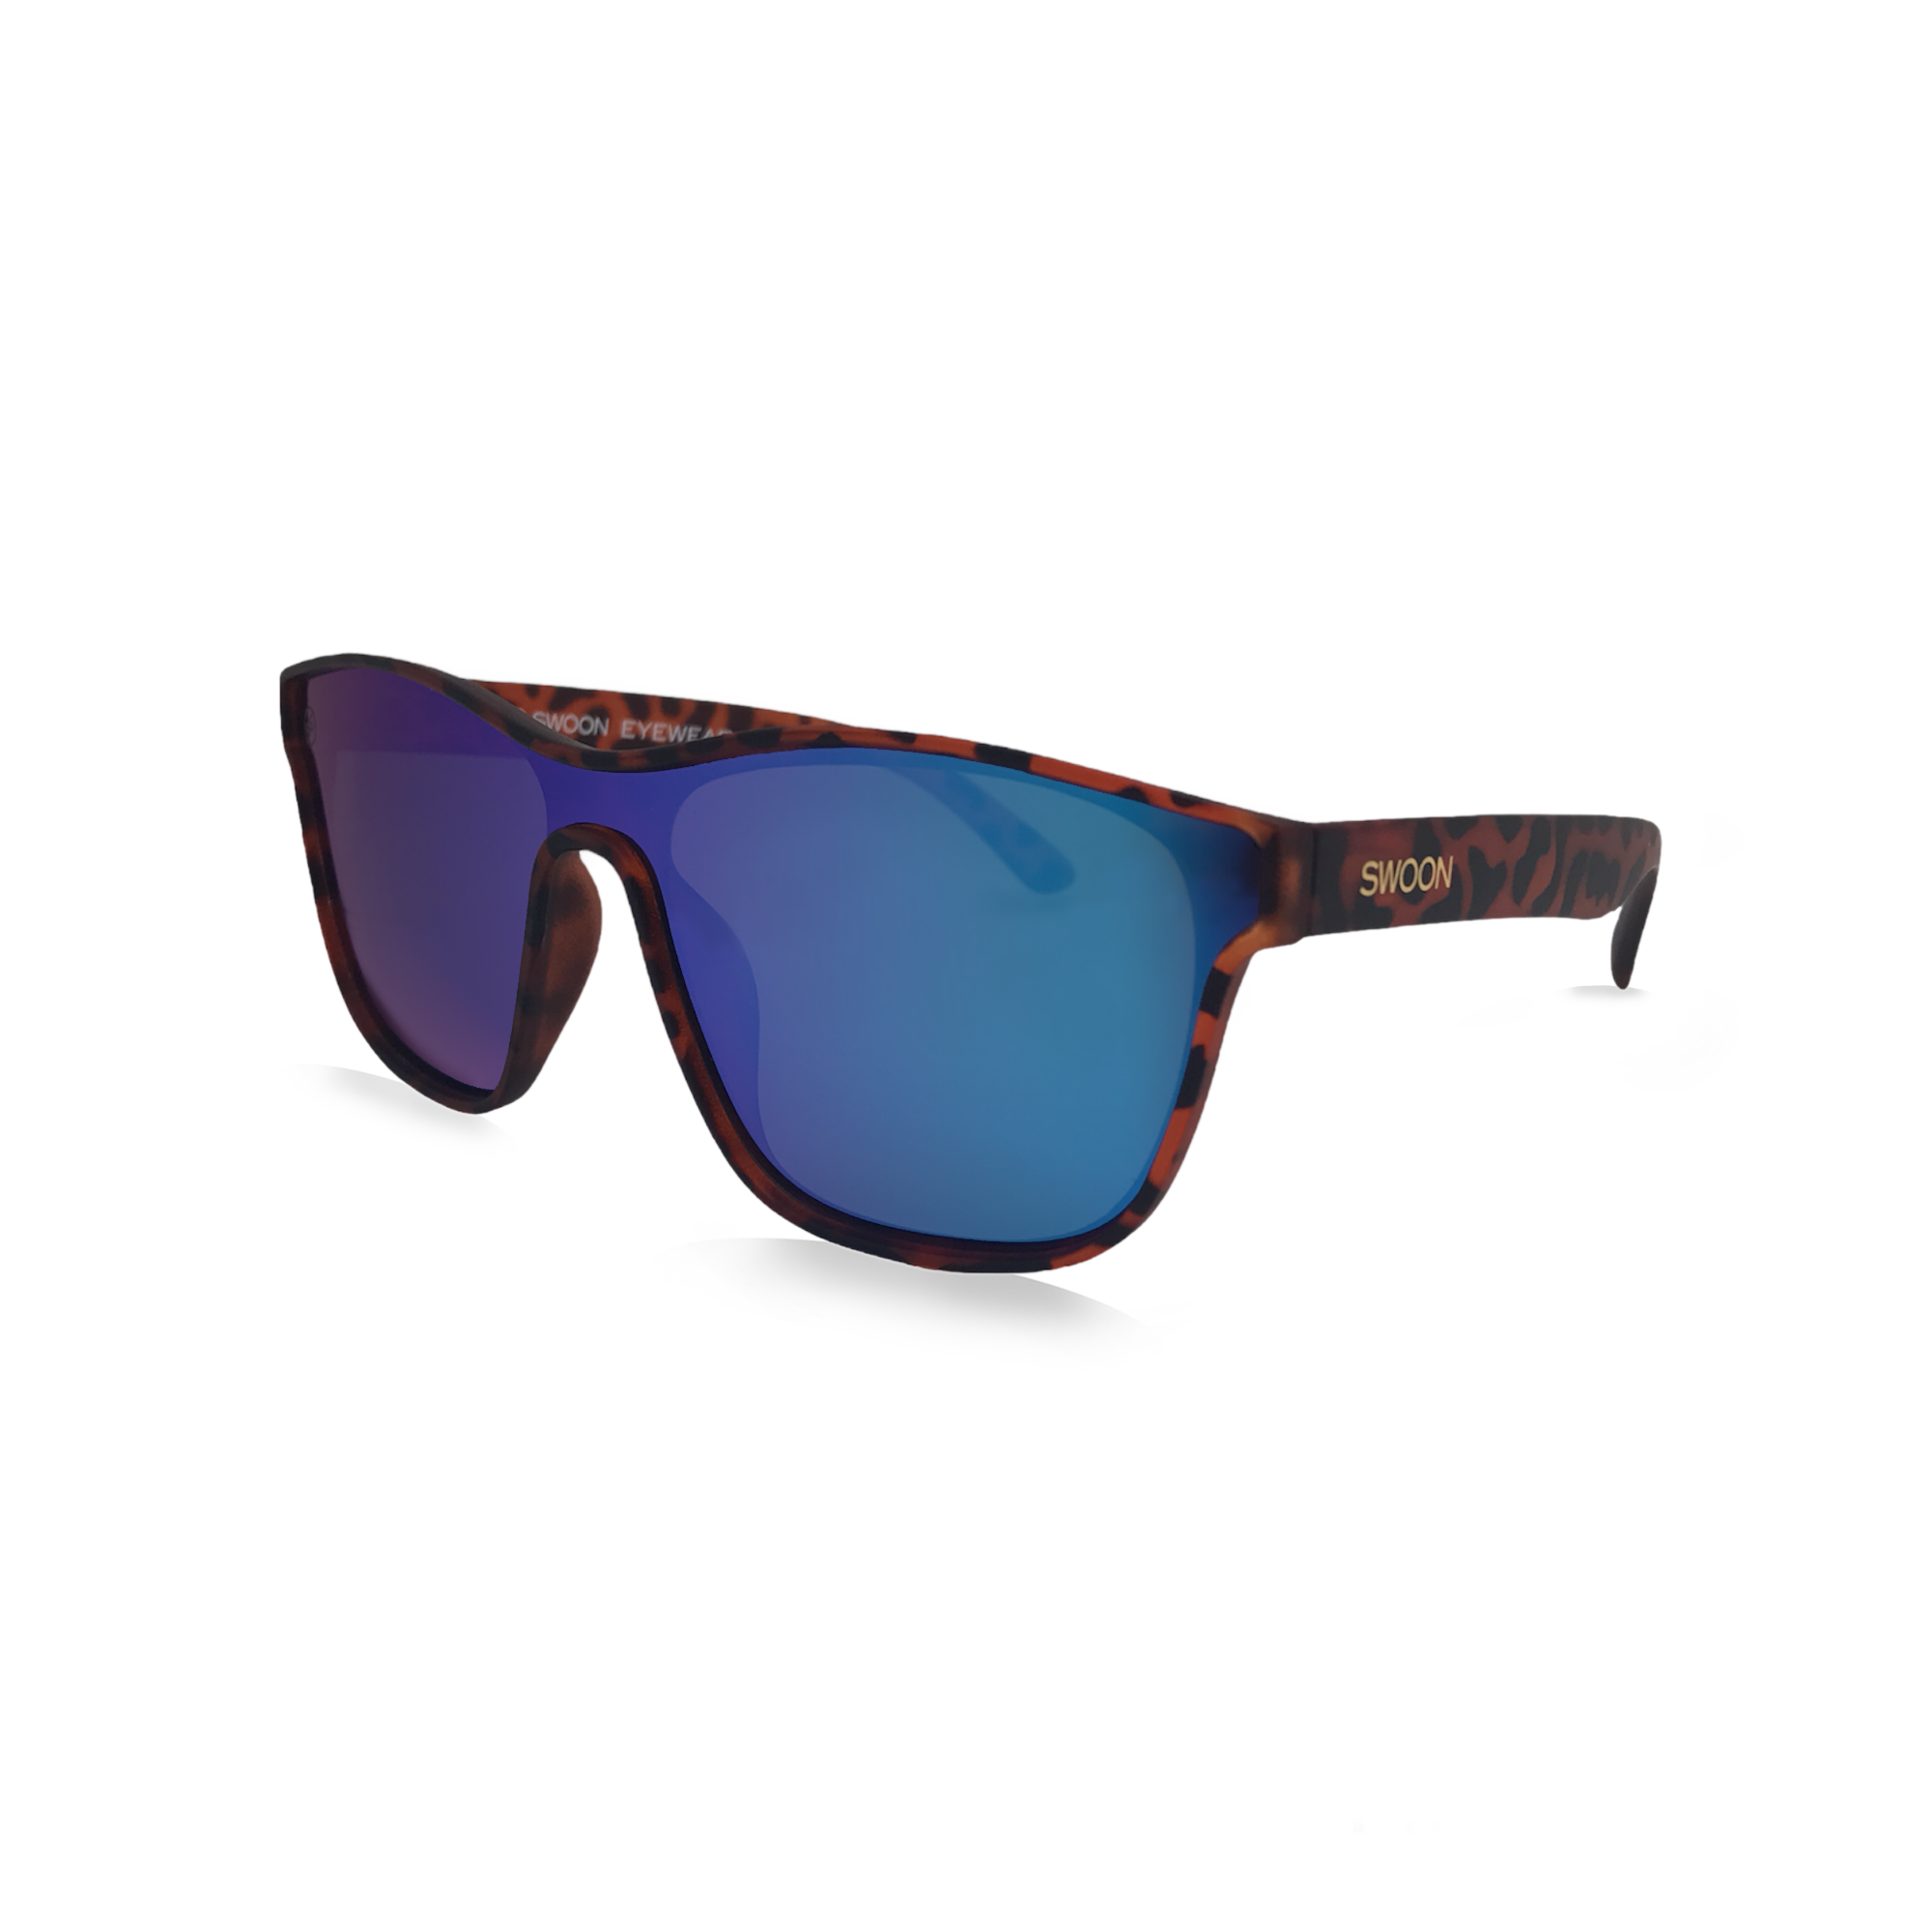 Polarized Blue-Green Mirror Matte Tortoise Sunglasses - Swoon Eyewear - Vegas Side View 2